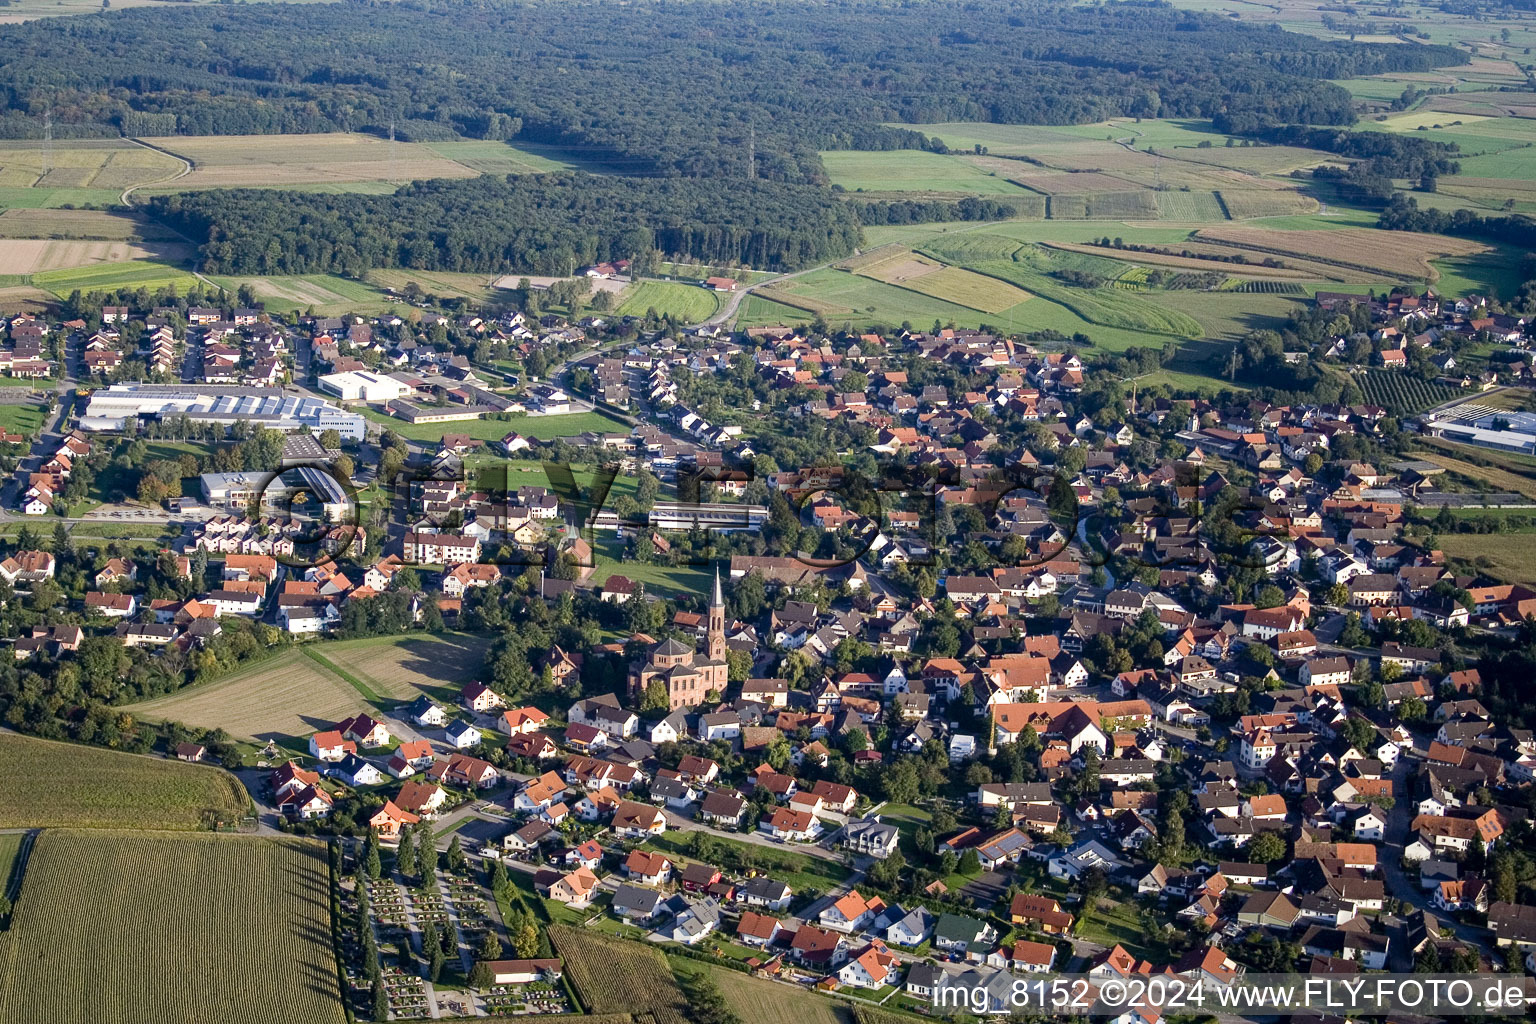 Aerial view of Church building in the village of in the district Rheinbischofsheim in Rheinau in the state Baden-Wurttemberg, Germany